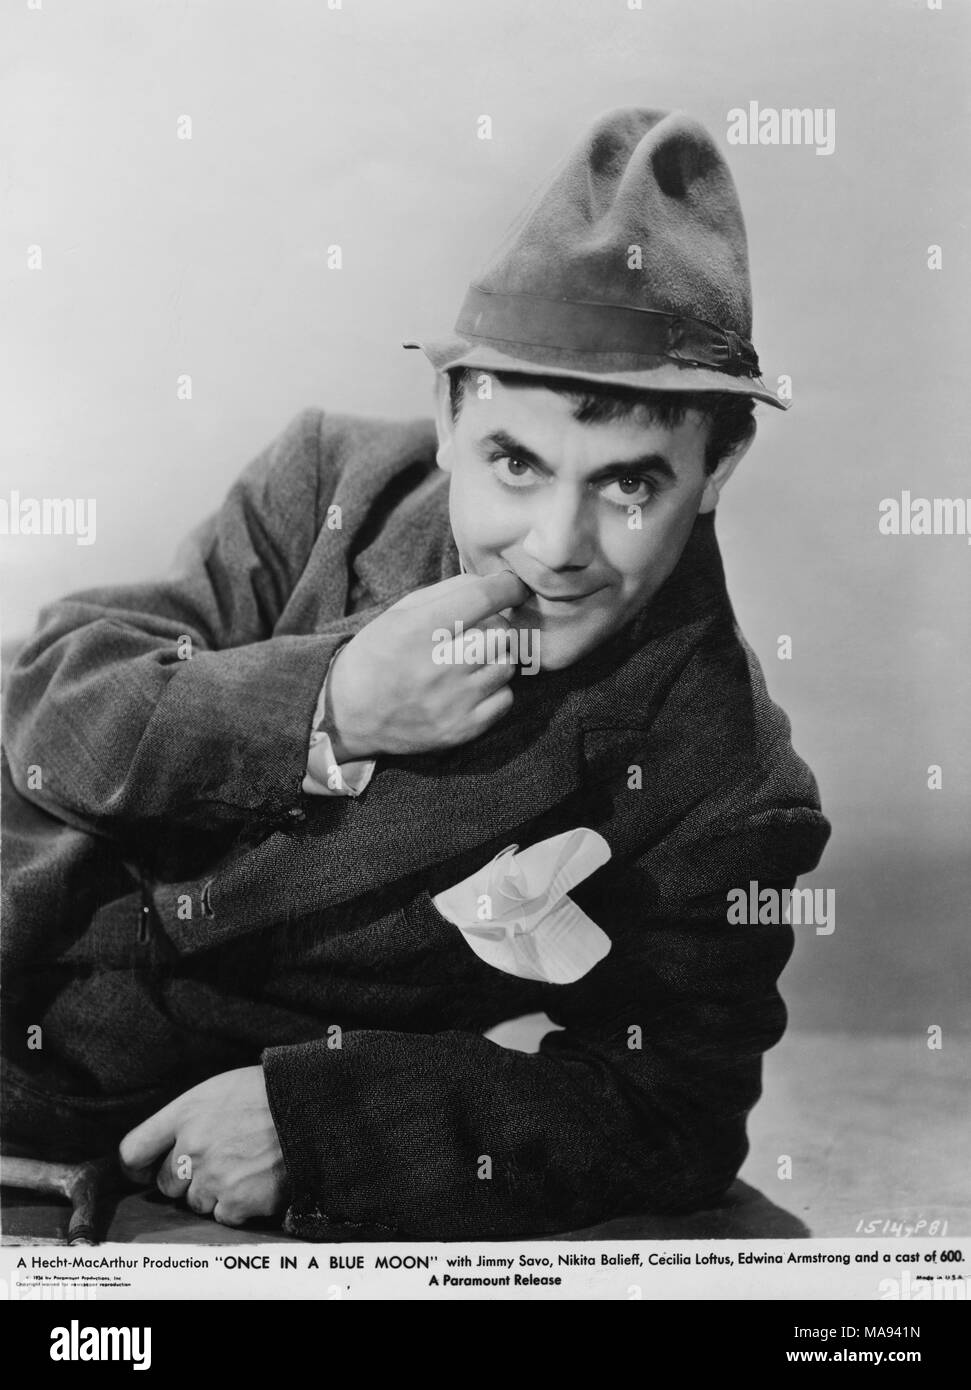 Jimmy Savo, Ritratto di pubblicità per i film, 'Una volta in una luna blu', Hecht-MacArthur Produzione, Paramount Pictures, 1935 Foto Stock